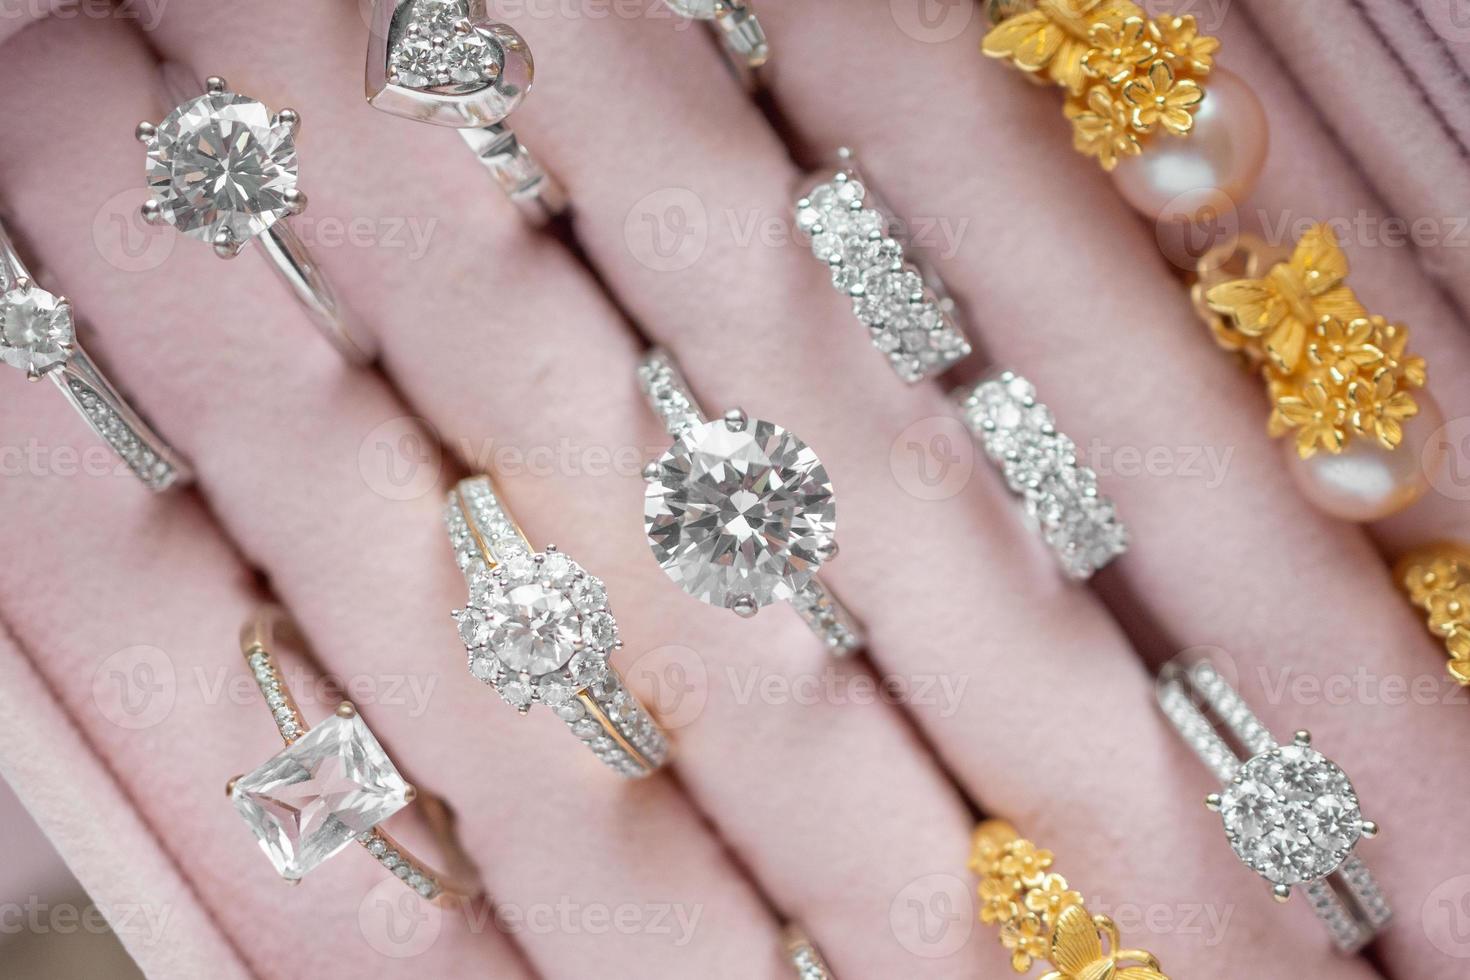 Jewelry diamond rings in box photo